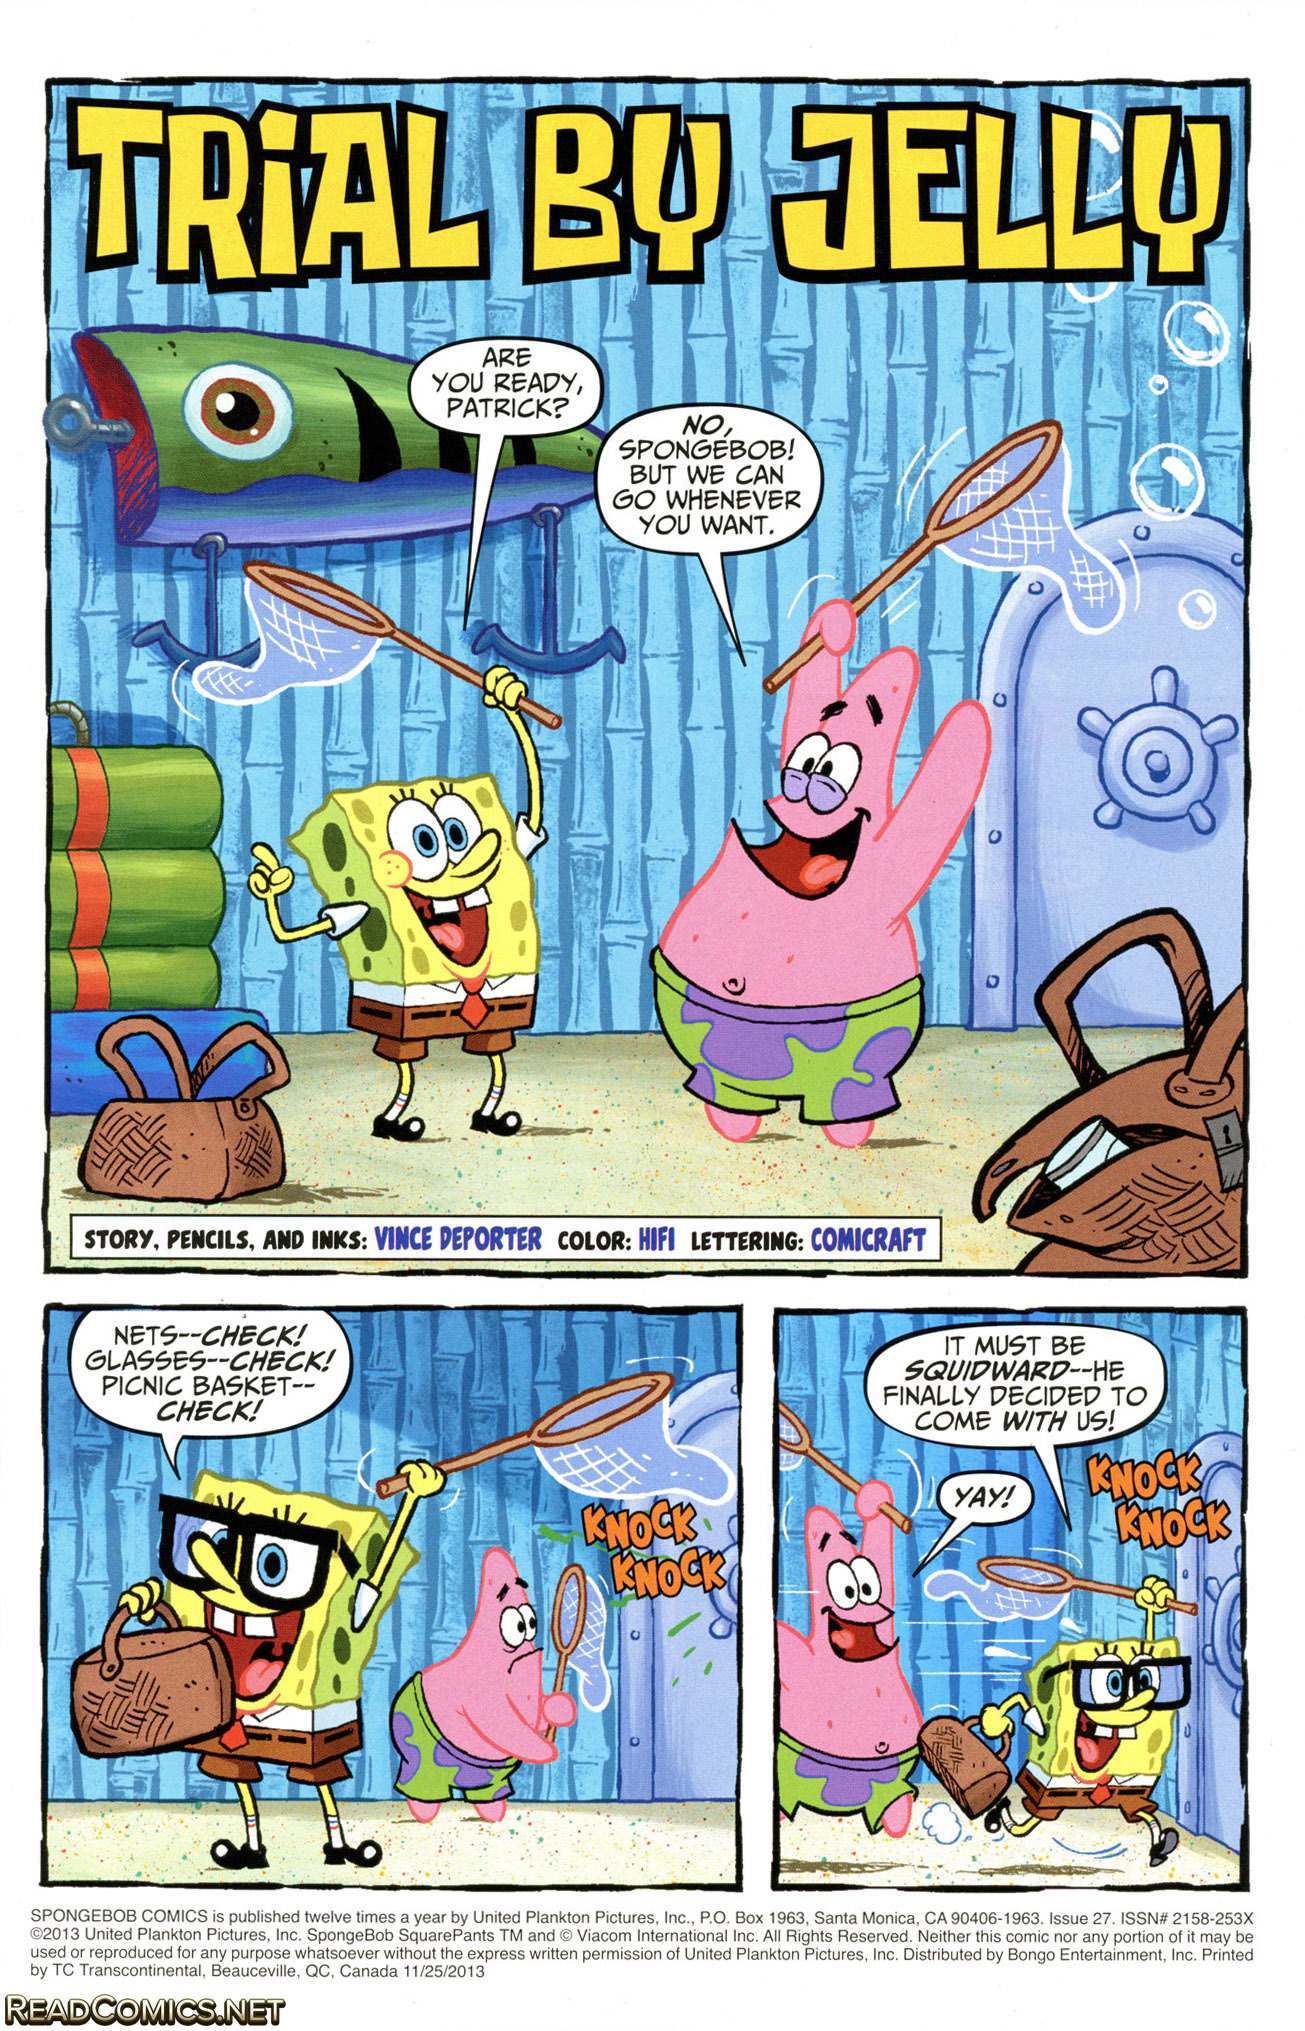 SpongeBob Comics (2011-): Chapter 27 - Page 3